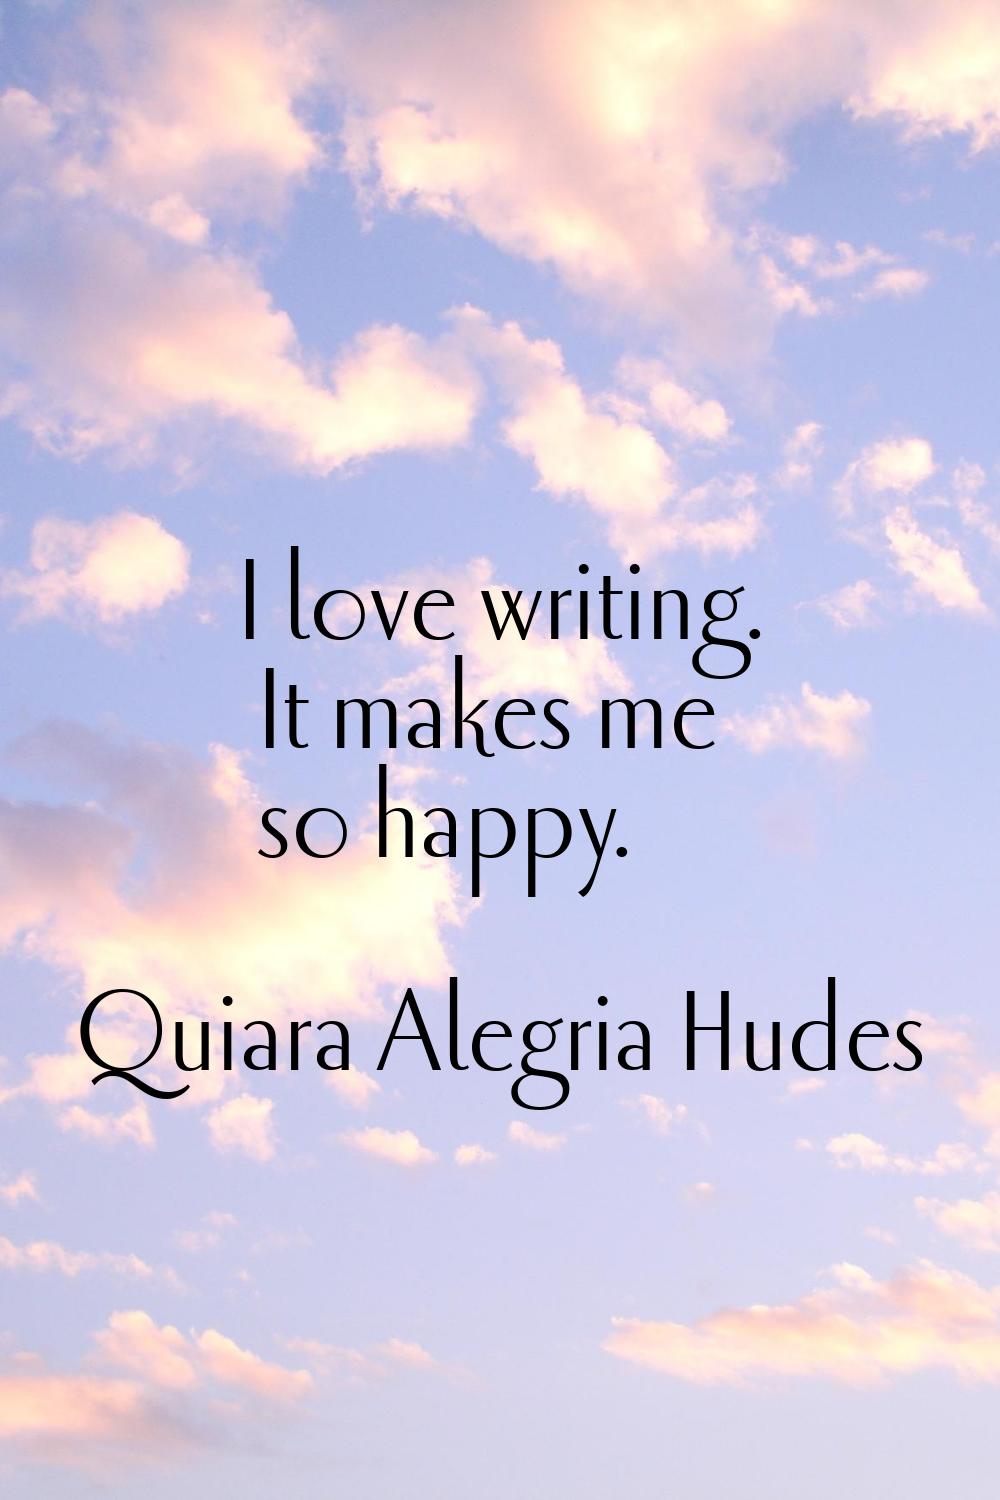 I love writing. It makes me so happy.